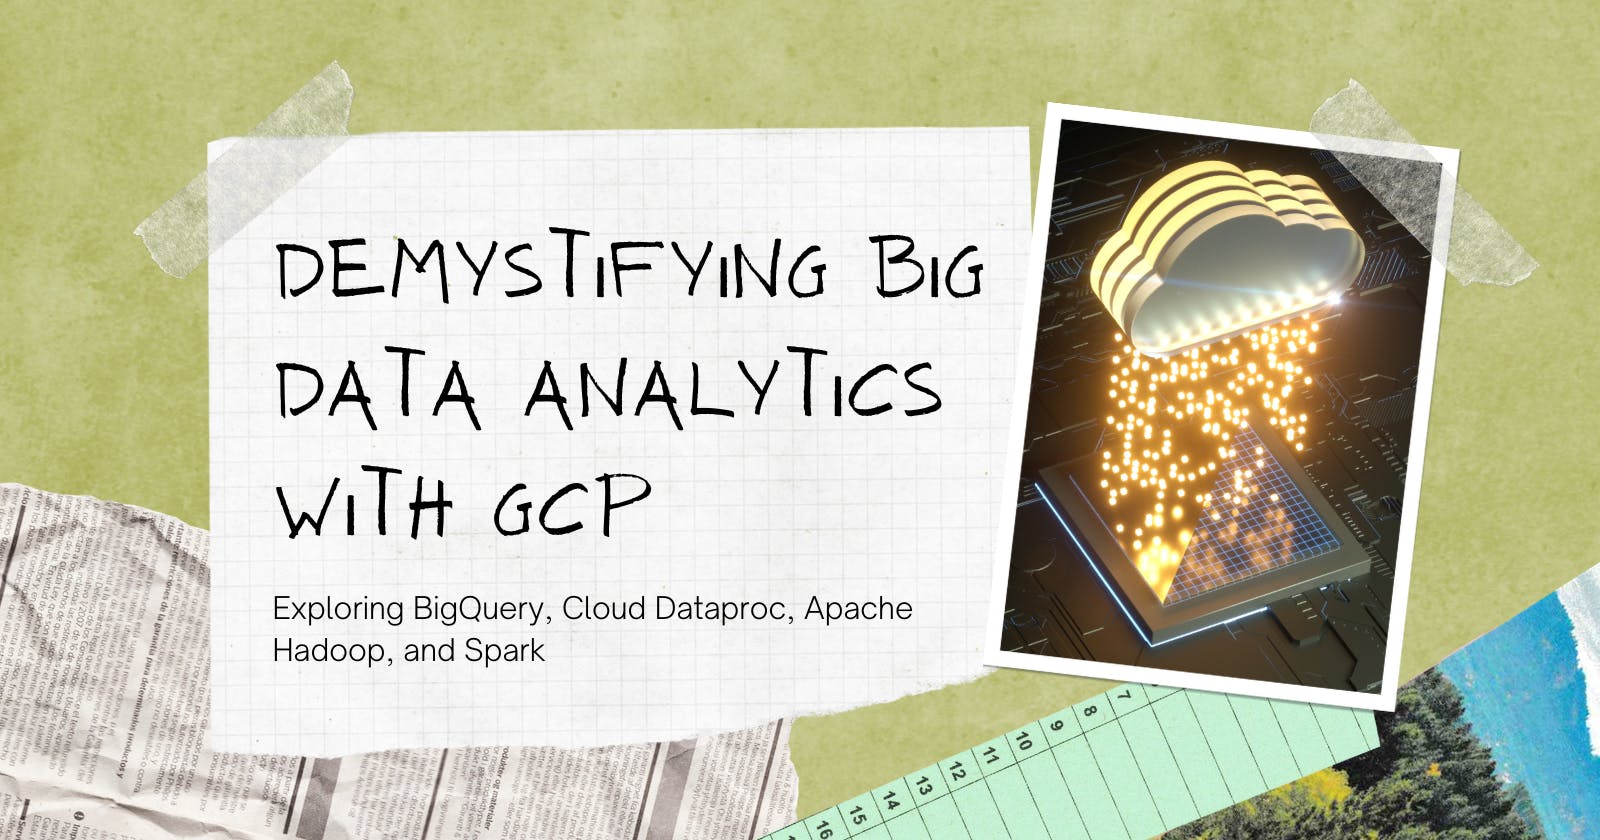 Demystifying Big Data Analytics with GCP